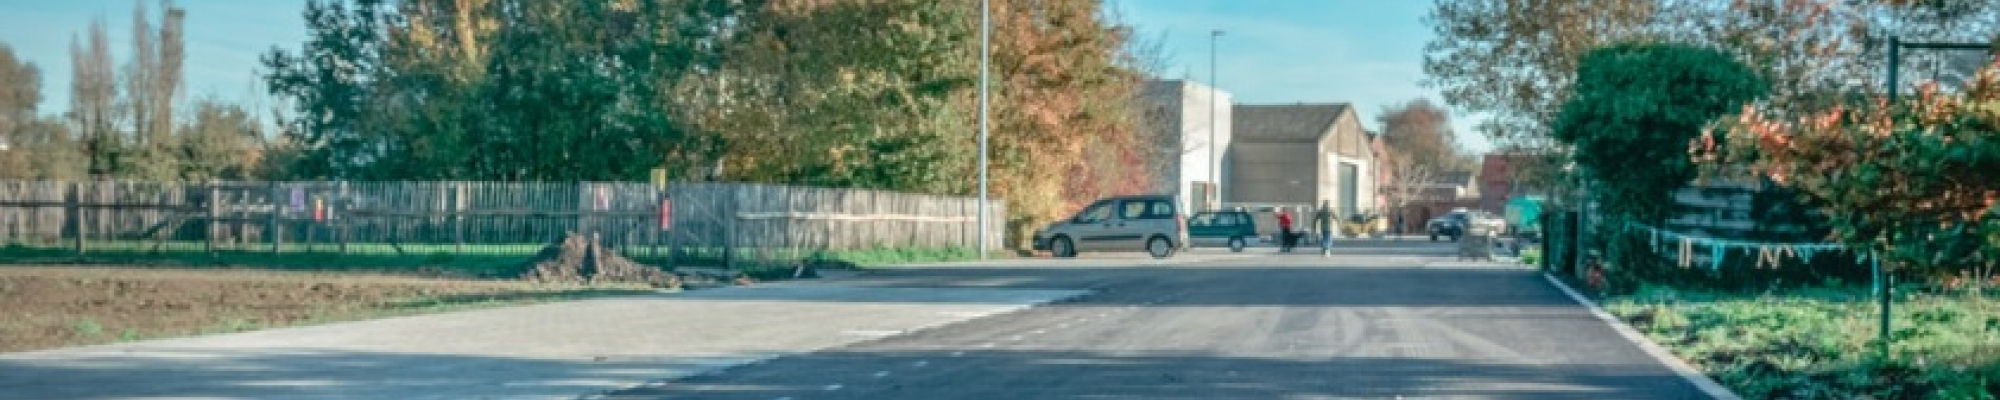 Parking Vlienderkouter in Bissegem